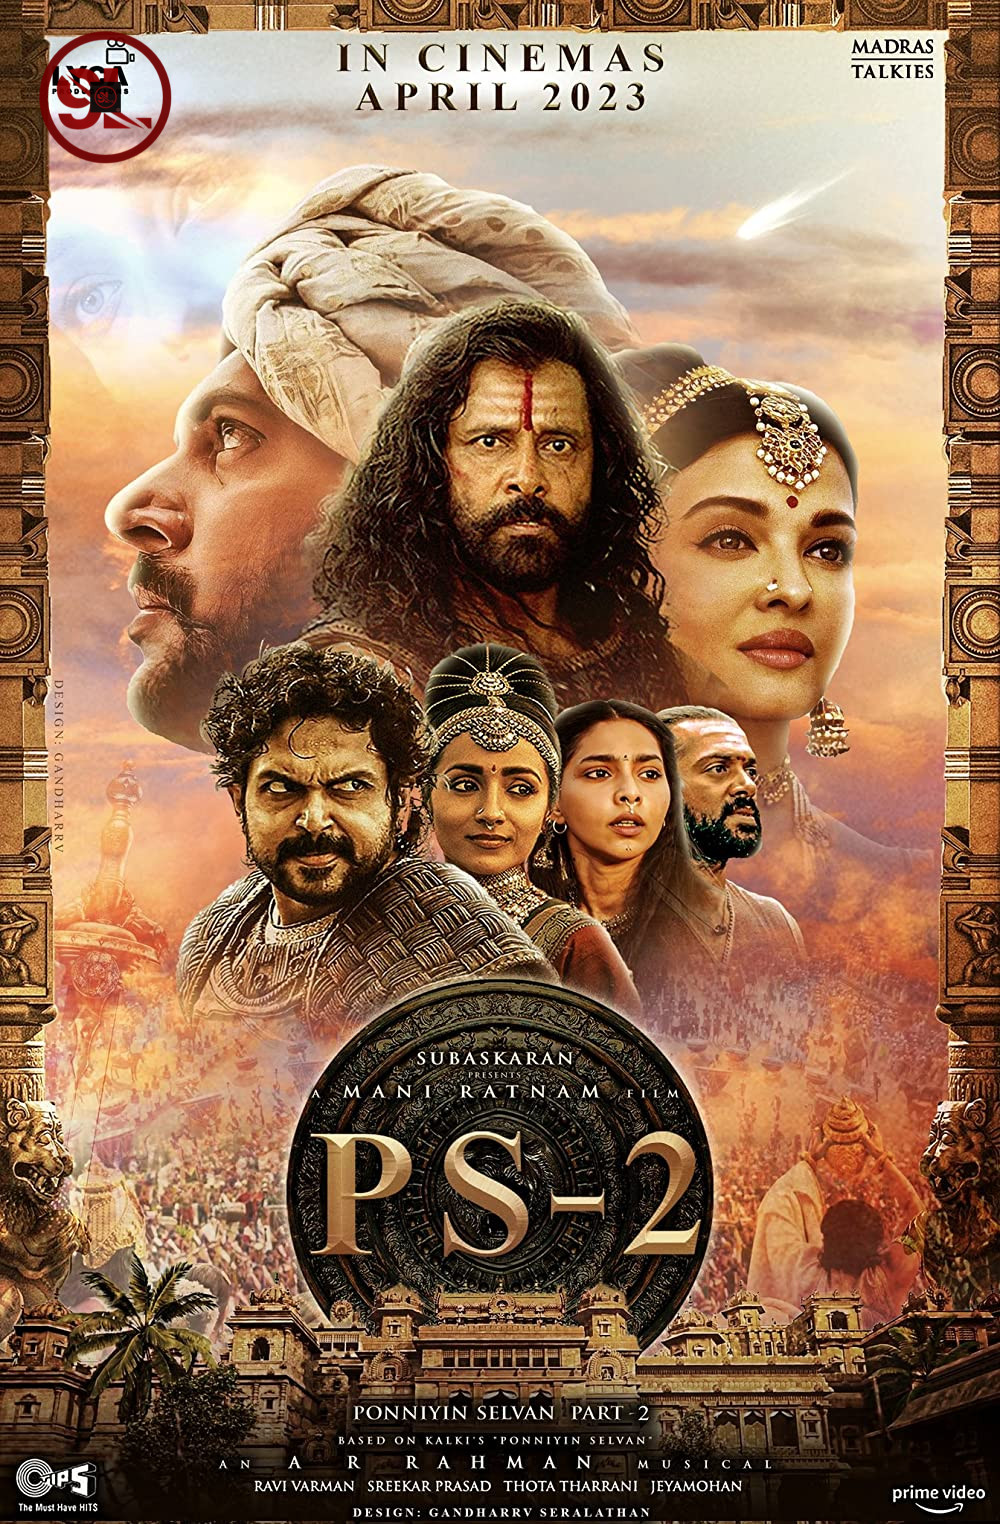 Ponniyin Selvan Part 2 (2023) (HDRip) Indian Movie